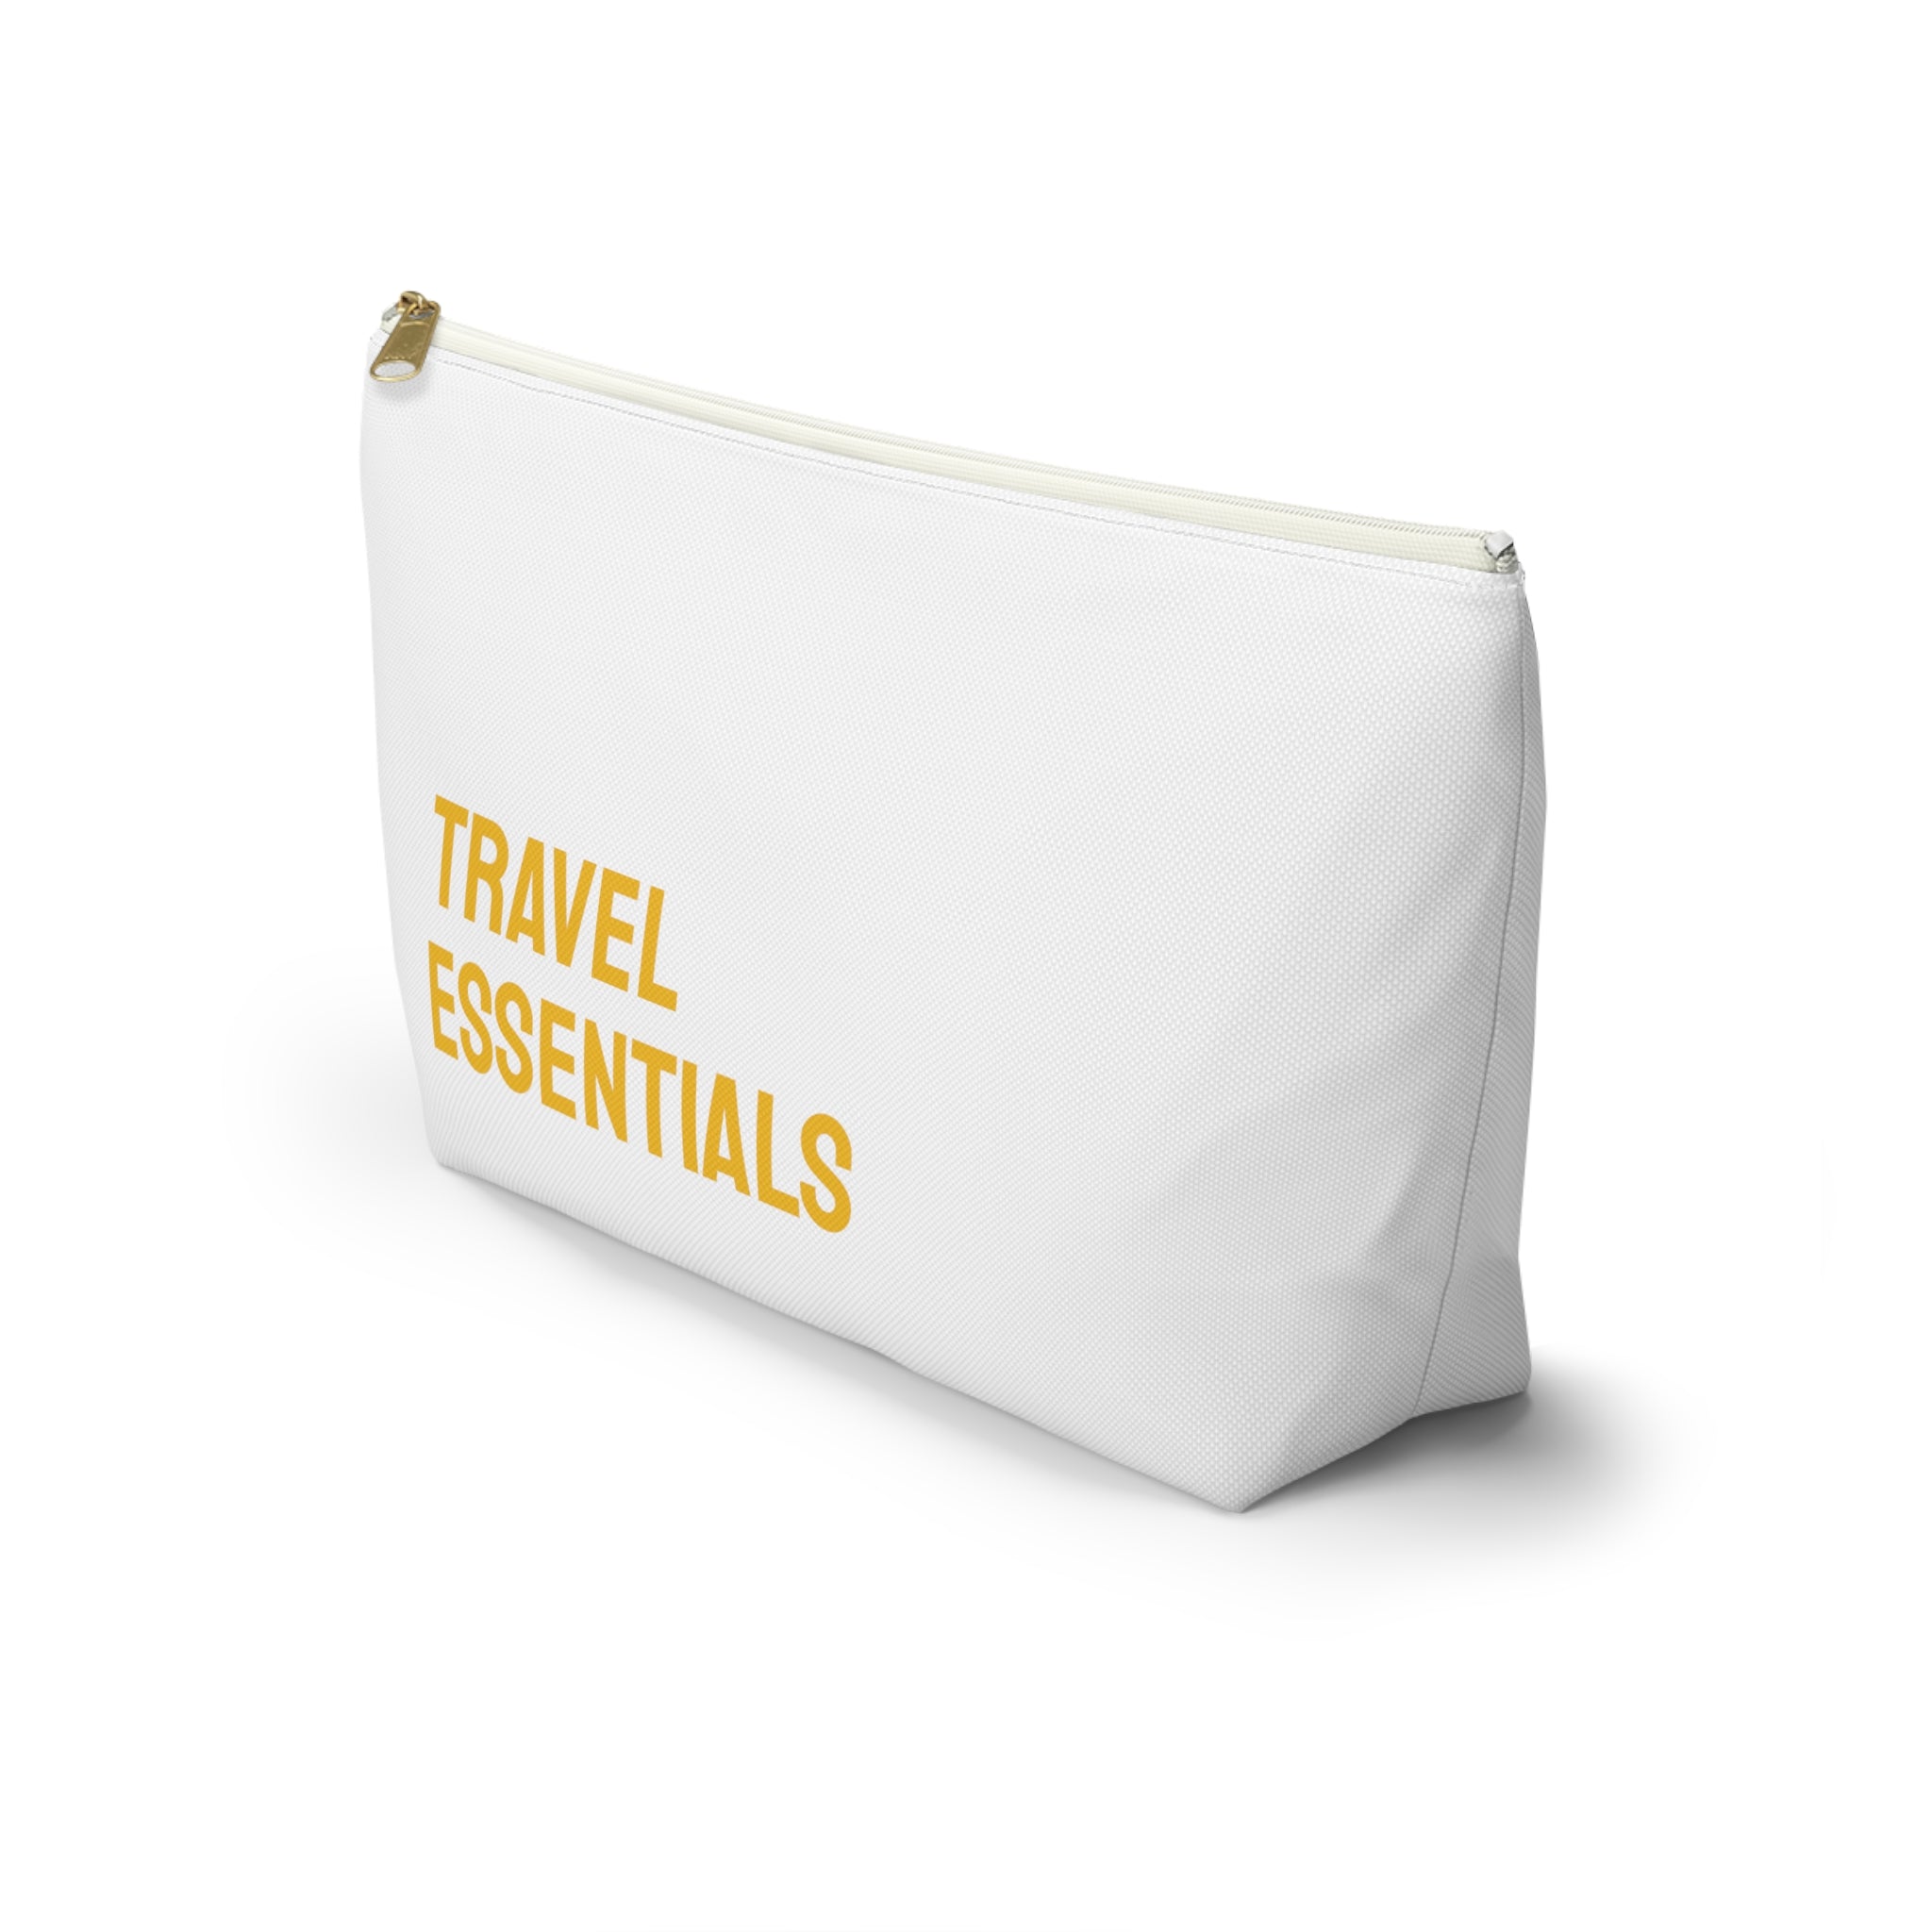 Travel essentials Pouch (Yellow)